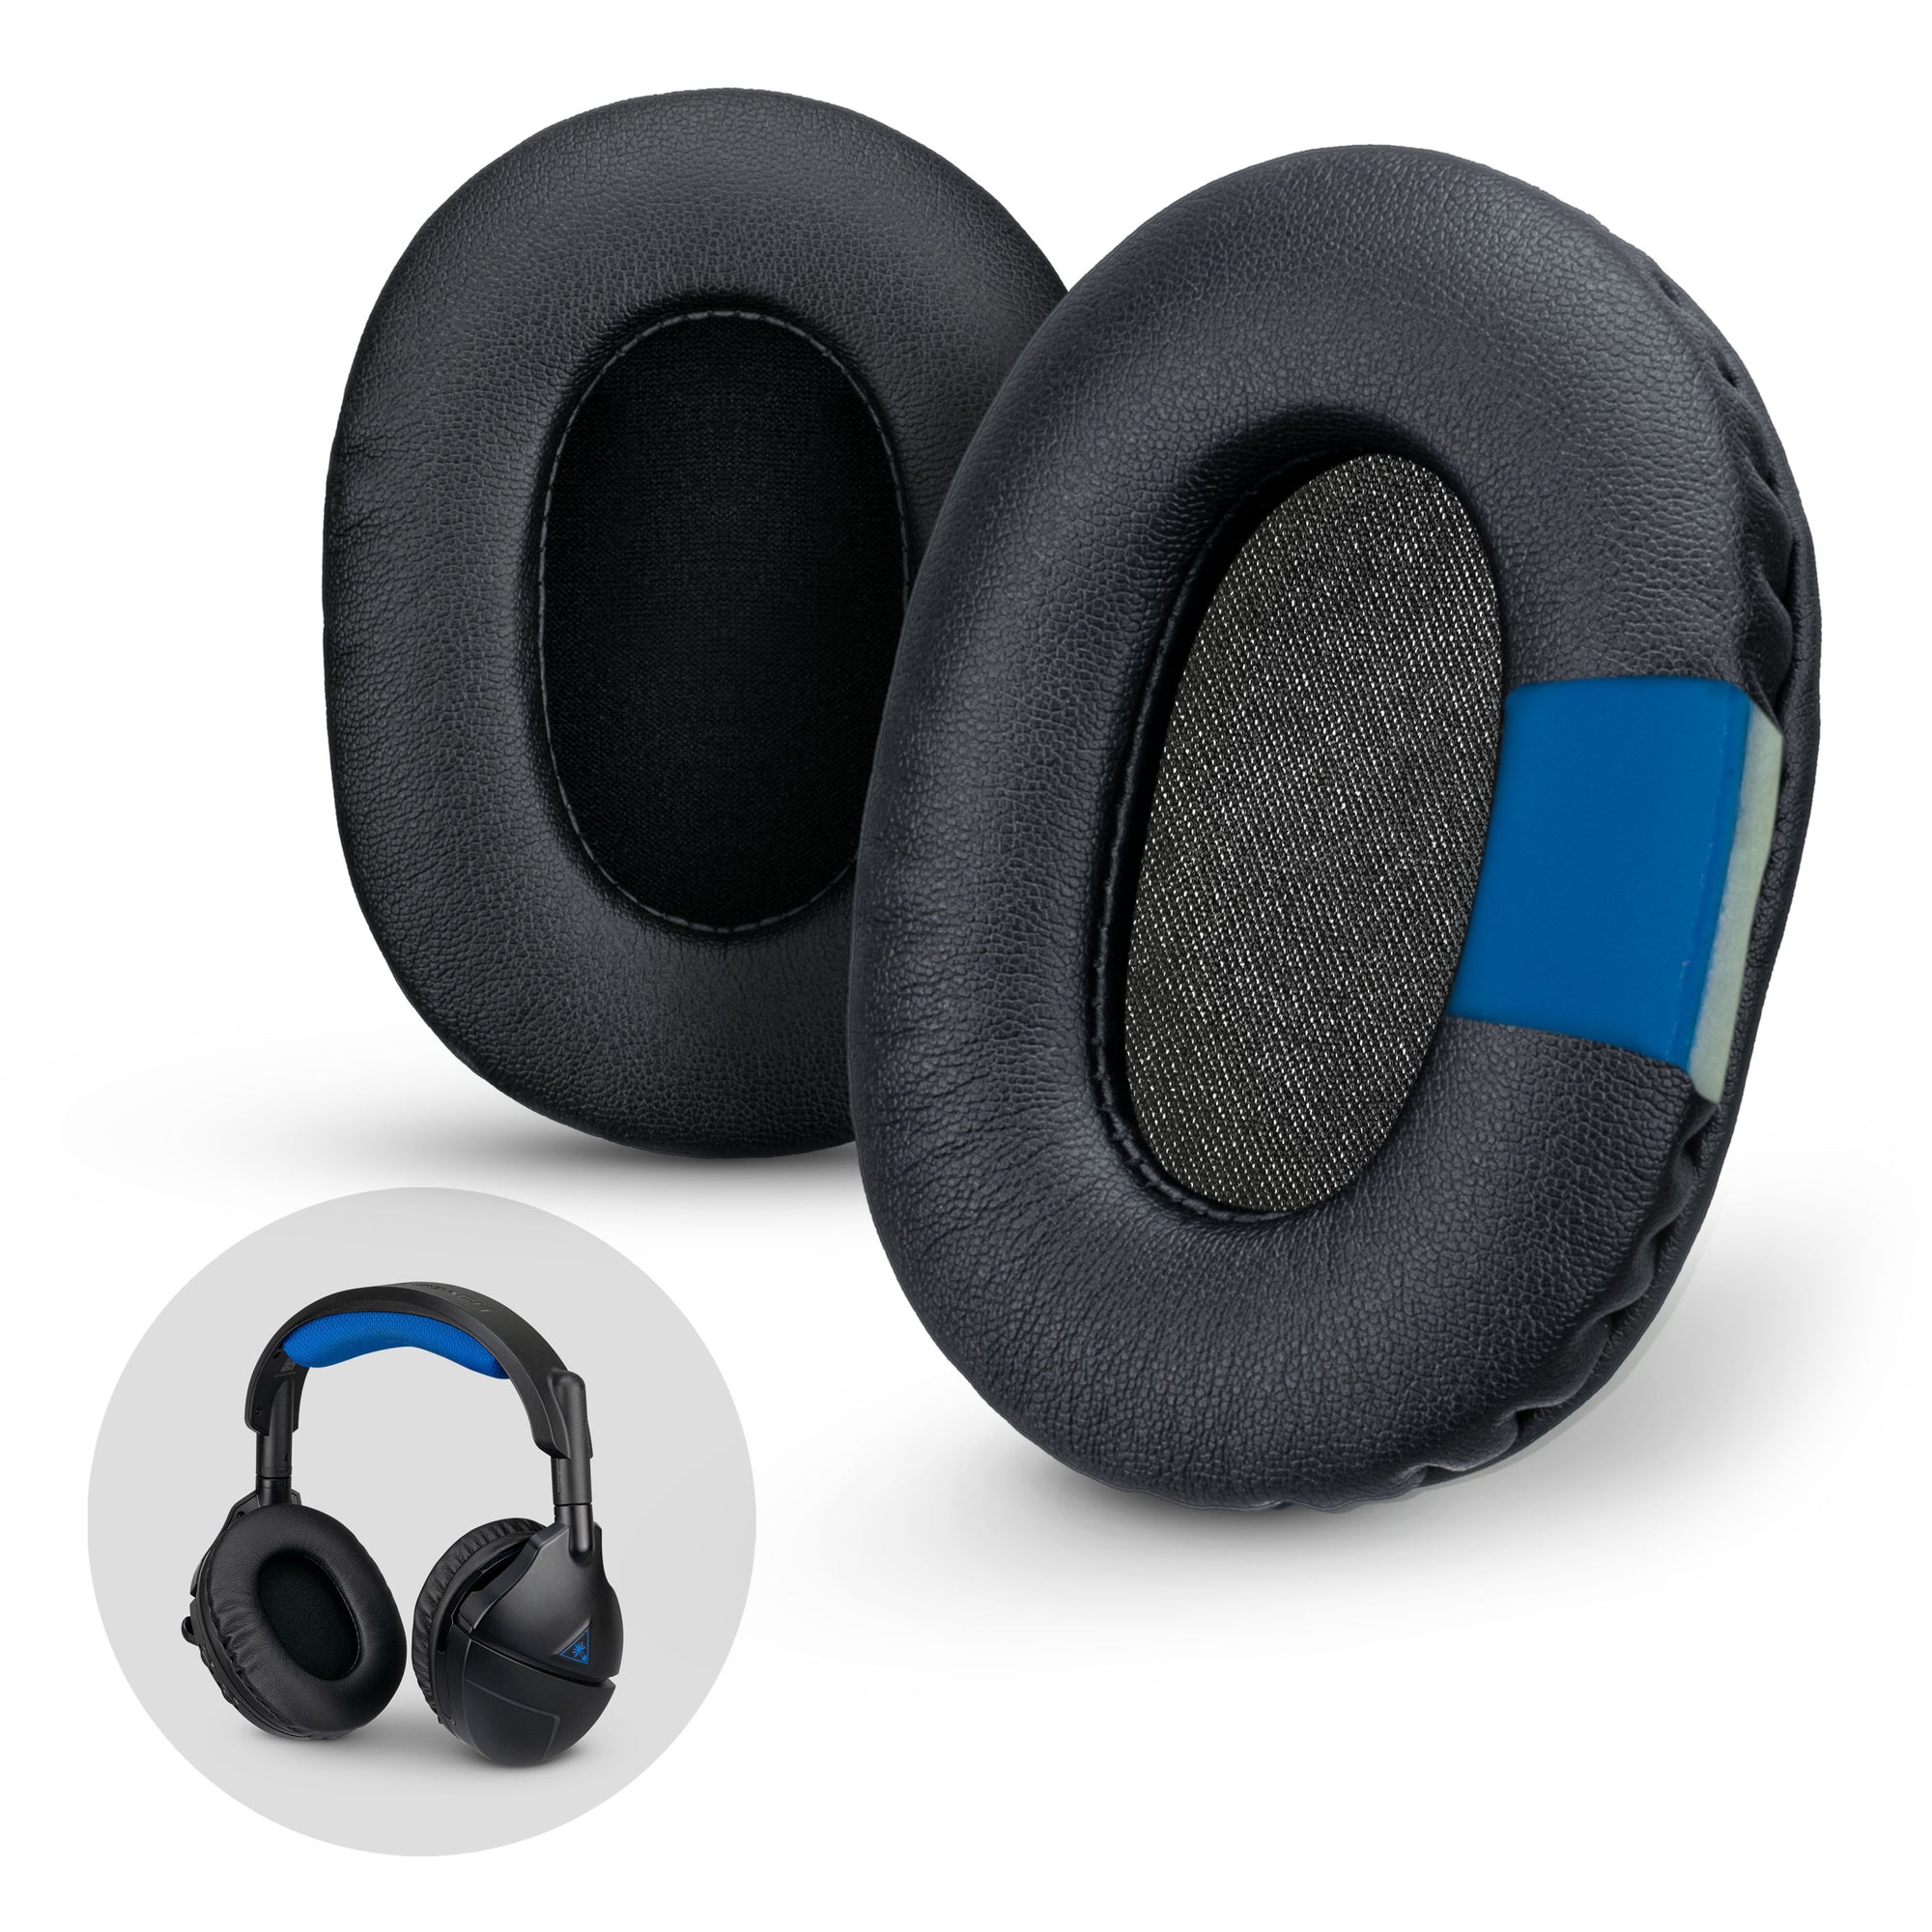 Enhanced Gaming Headphone Earpads - Small Oval - PU Leather w/ Cooling Gel & Memory Foam for Steelseries, Hyperx, Sony MDR-7506, AKG, Turtlebeach, Sennheiser & More